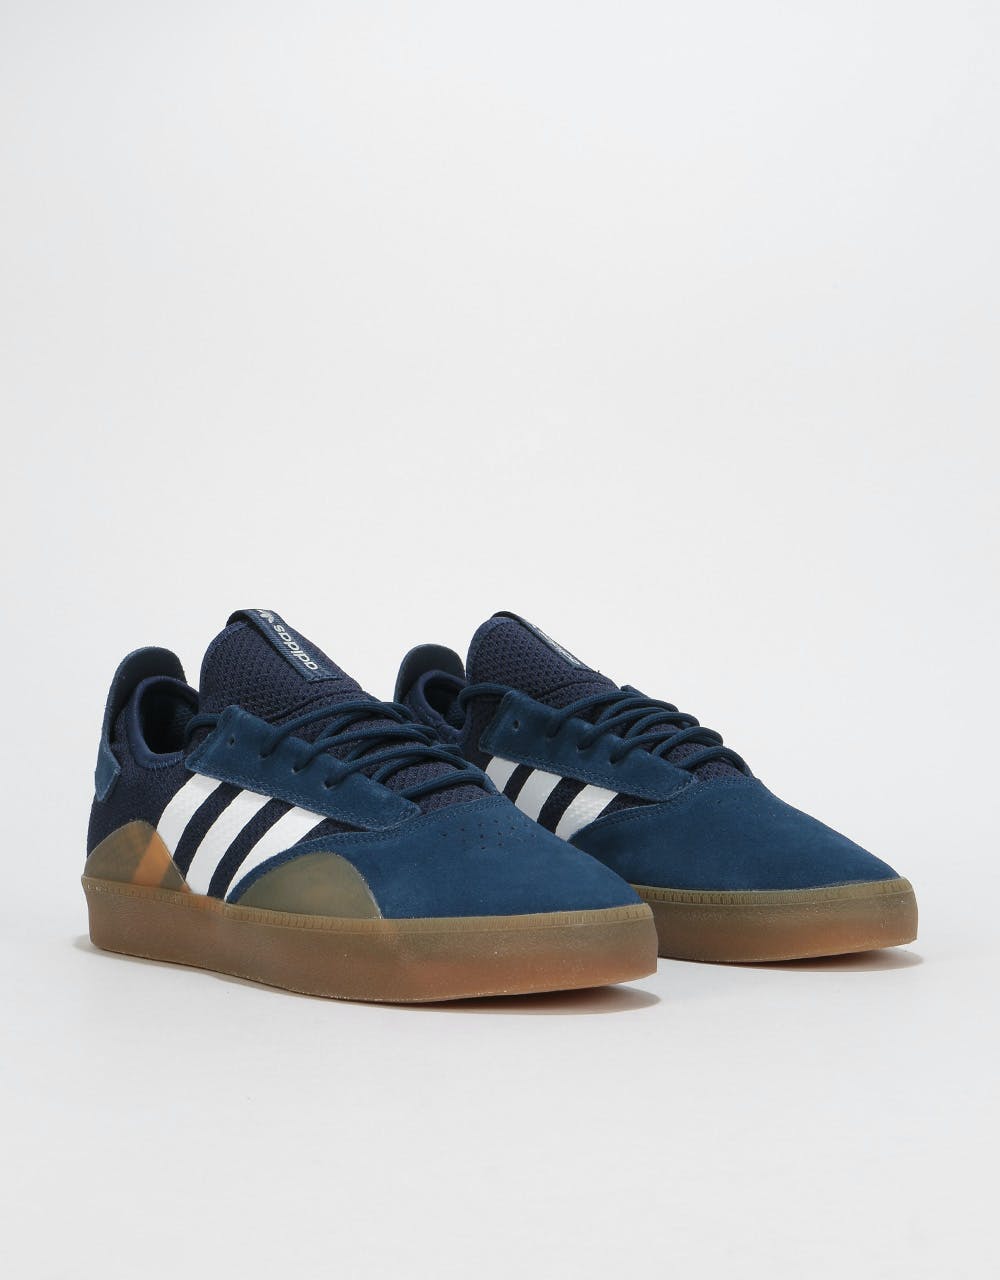 Adidas 3ST.001 Skate Shoes - Collegiate Navy/White/Gum